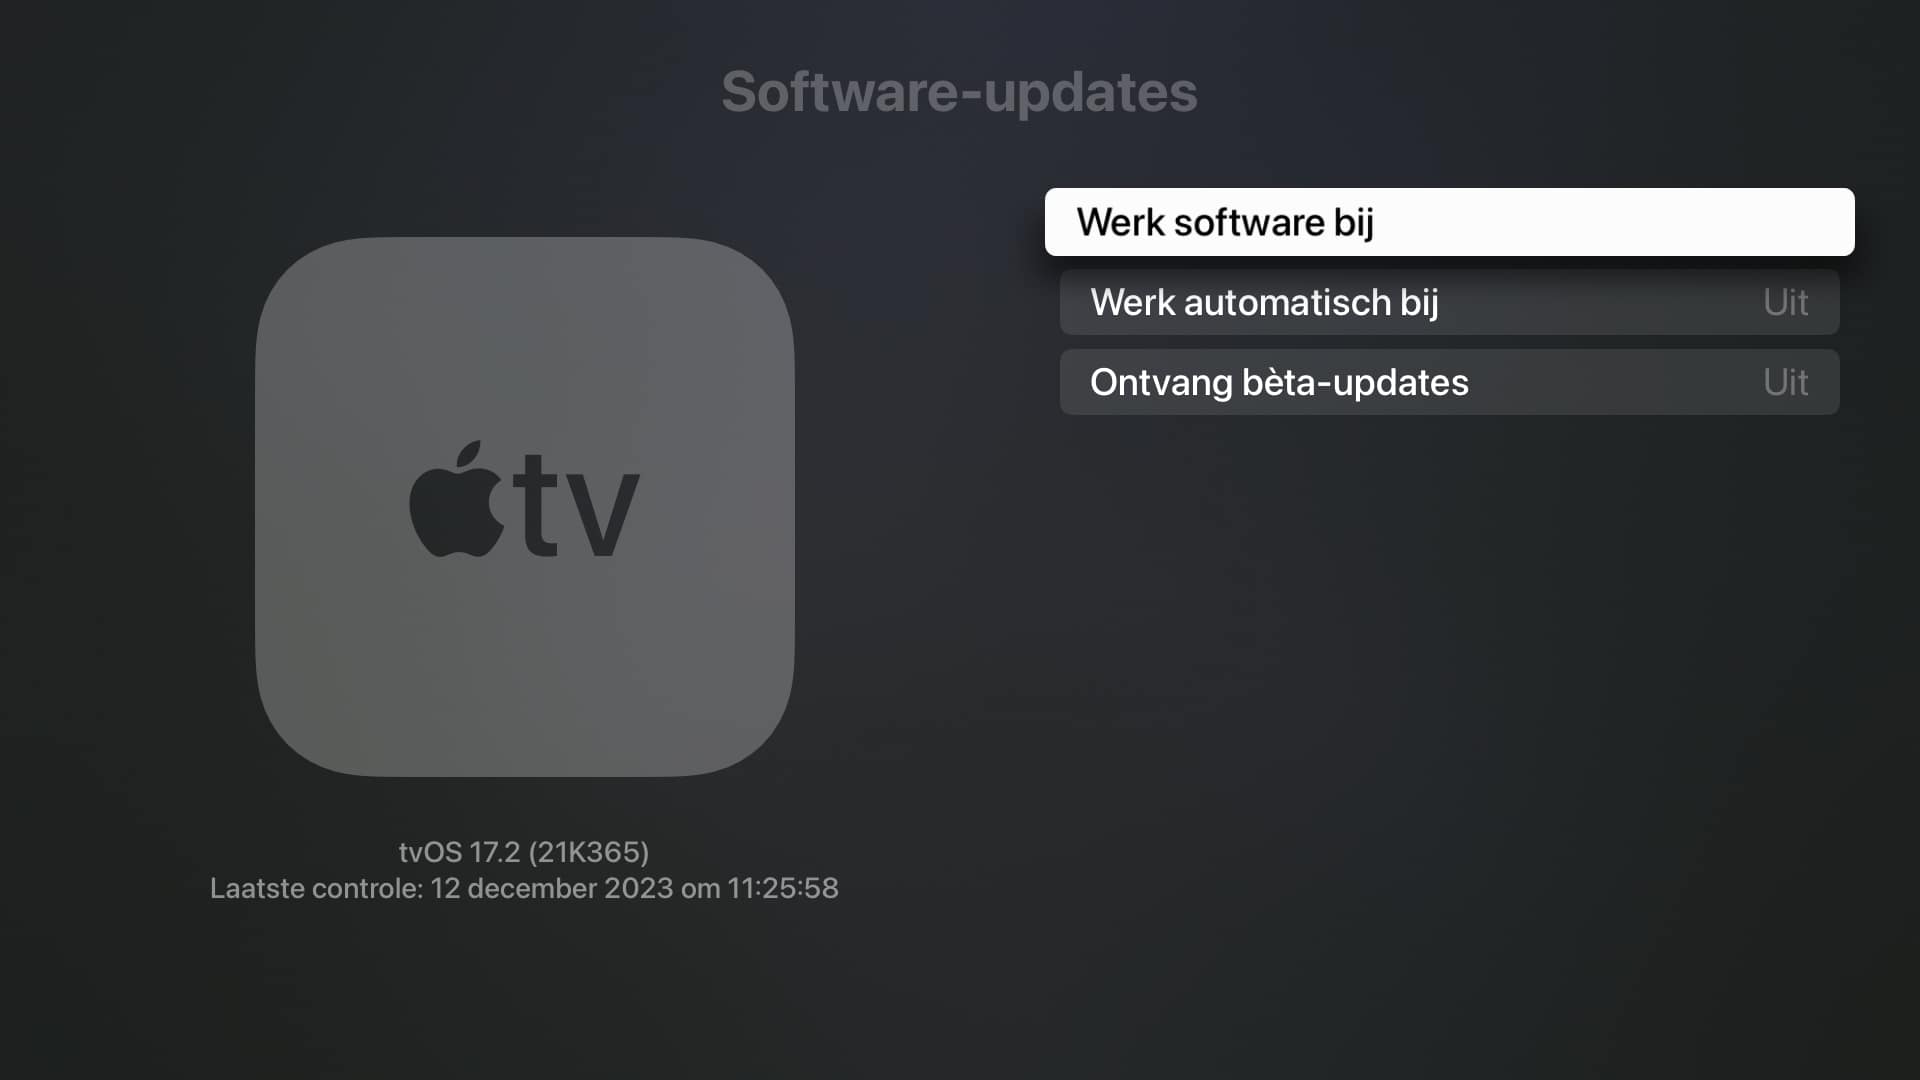 https://www.macfreak.nl/modules/news/images/zArt.AppleTVSoftwareUpdate-2.jpg